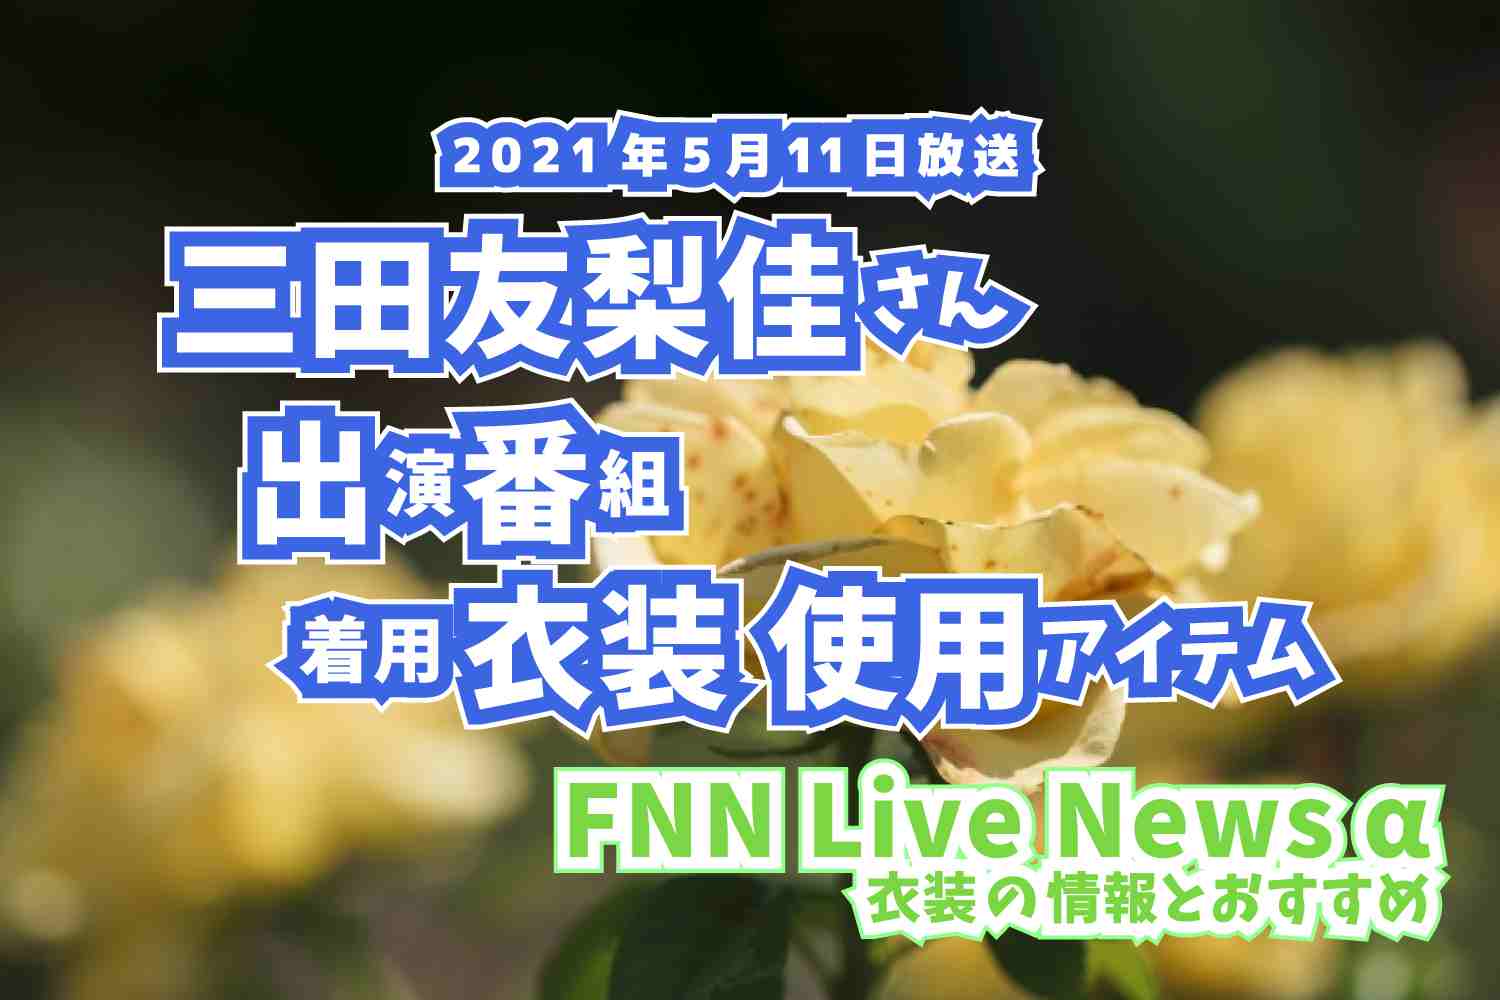 FNN Live News α　三田友梨佳さん　衣装　2021年5月11日放送